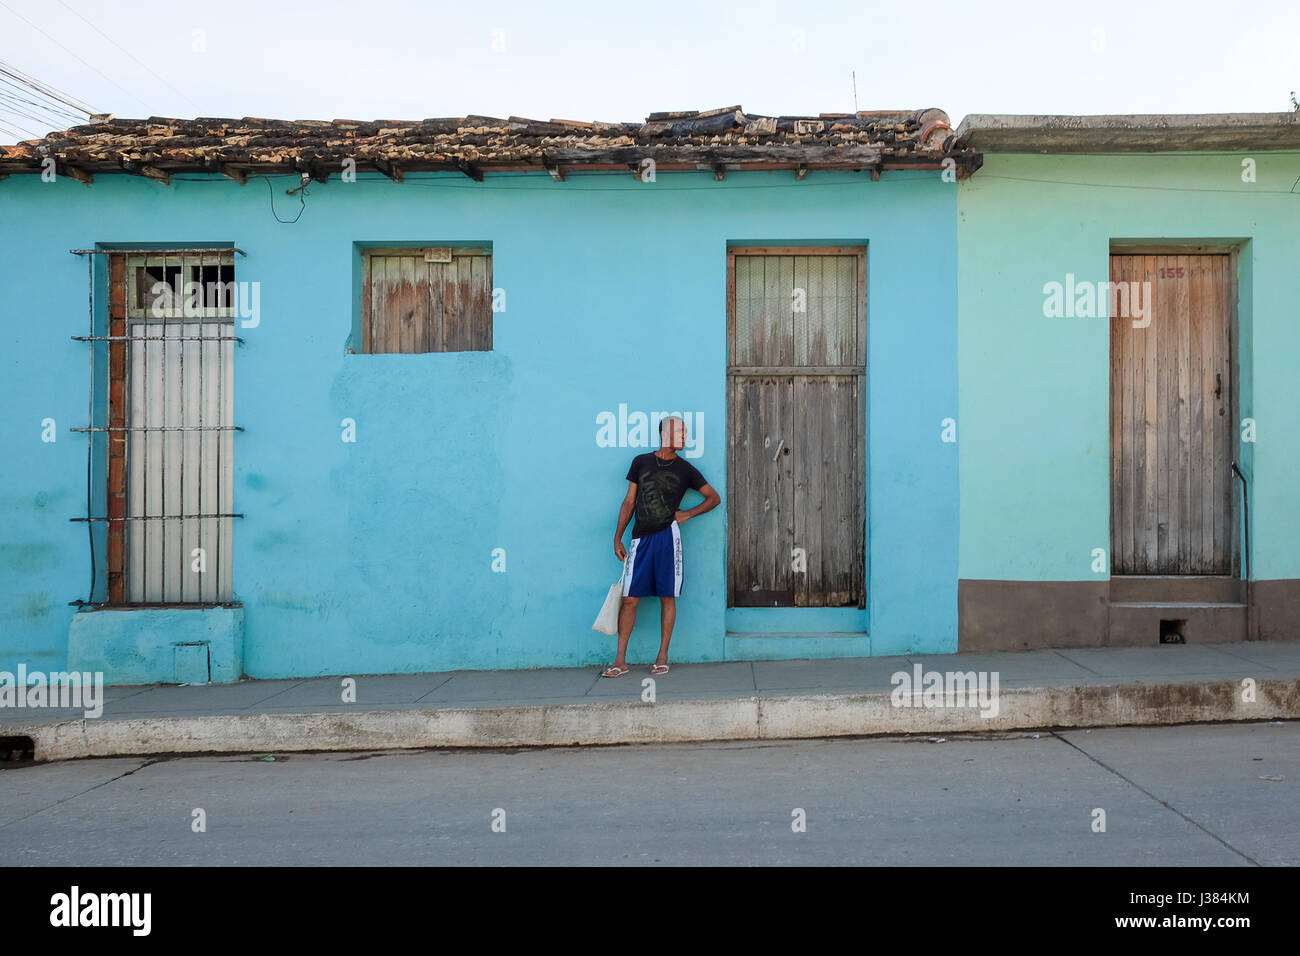 Street scene in Trinidad, Sancti Spiritus, Cuba. Local cuban man standing in front of a pastel coloured building. Stock Photo